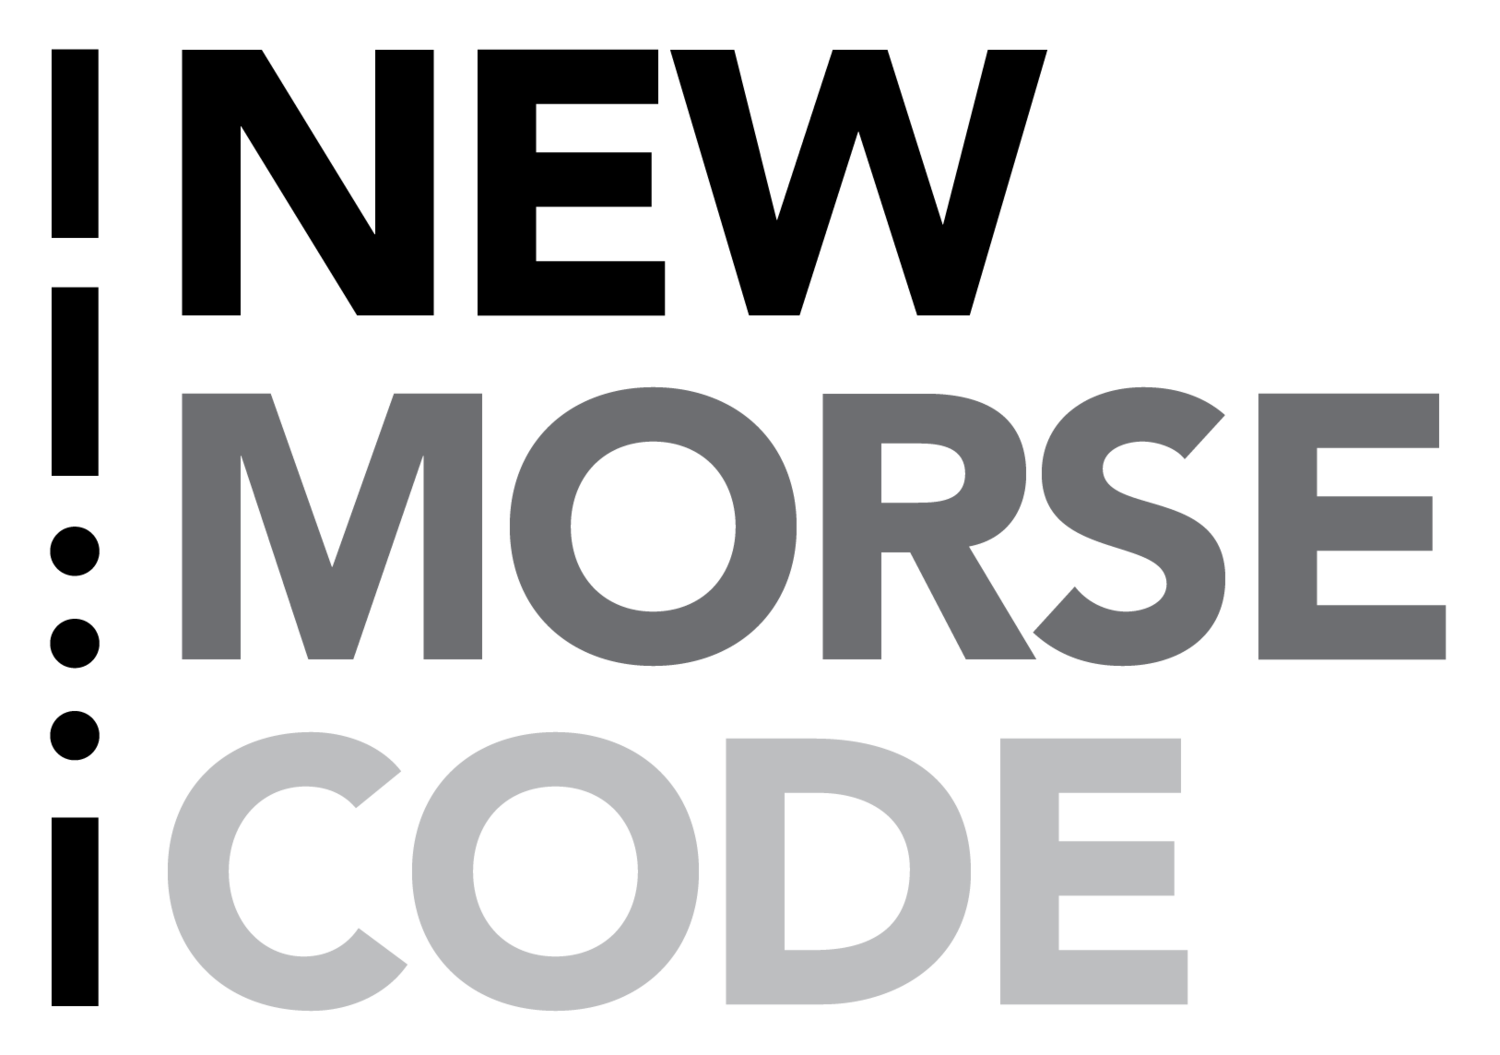 New Morse Code